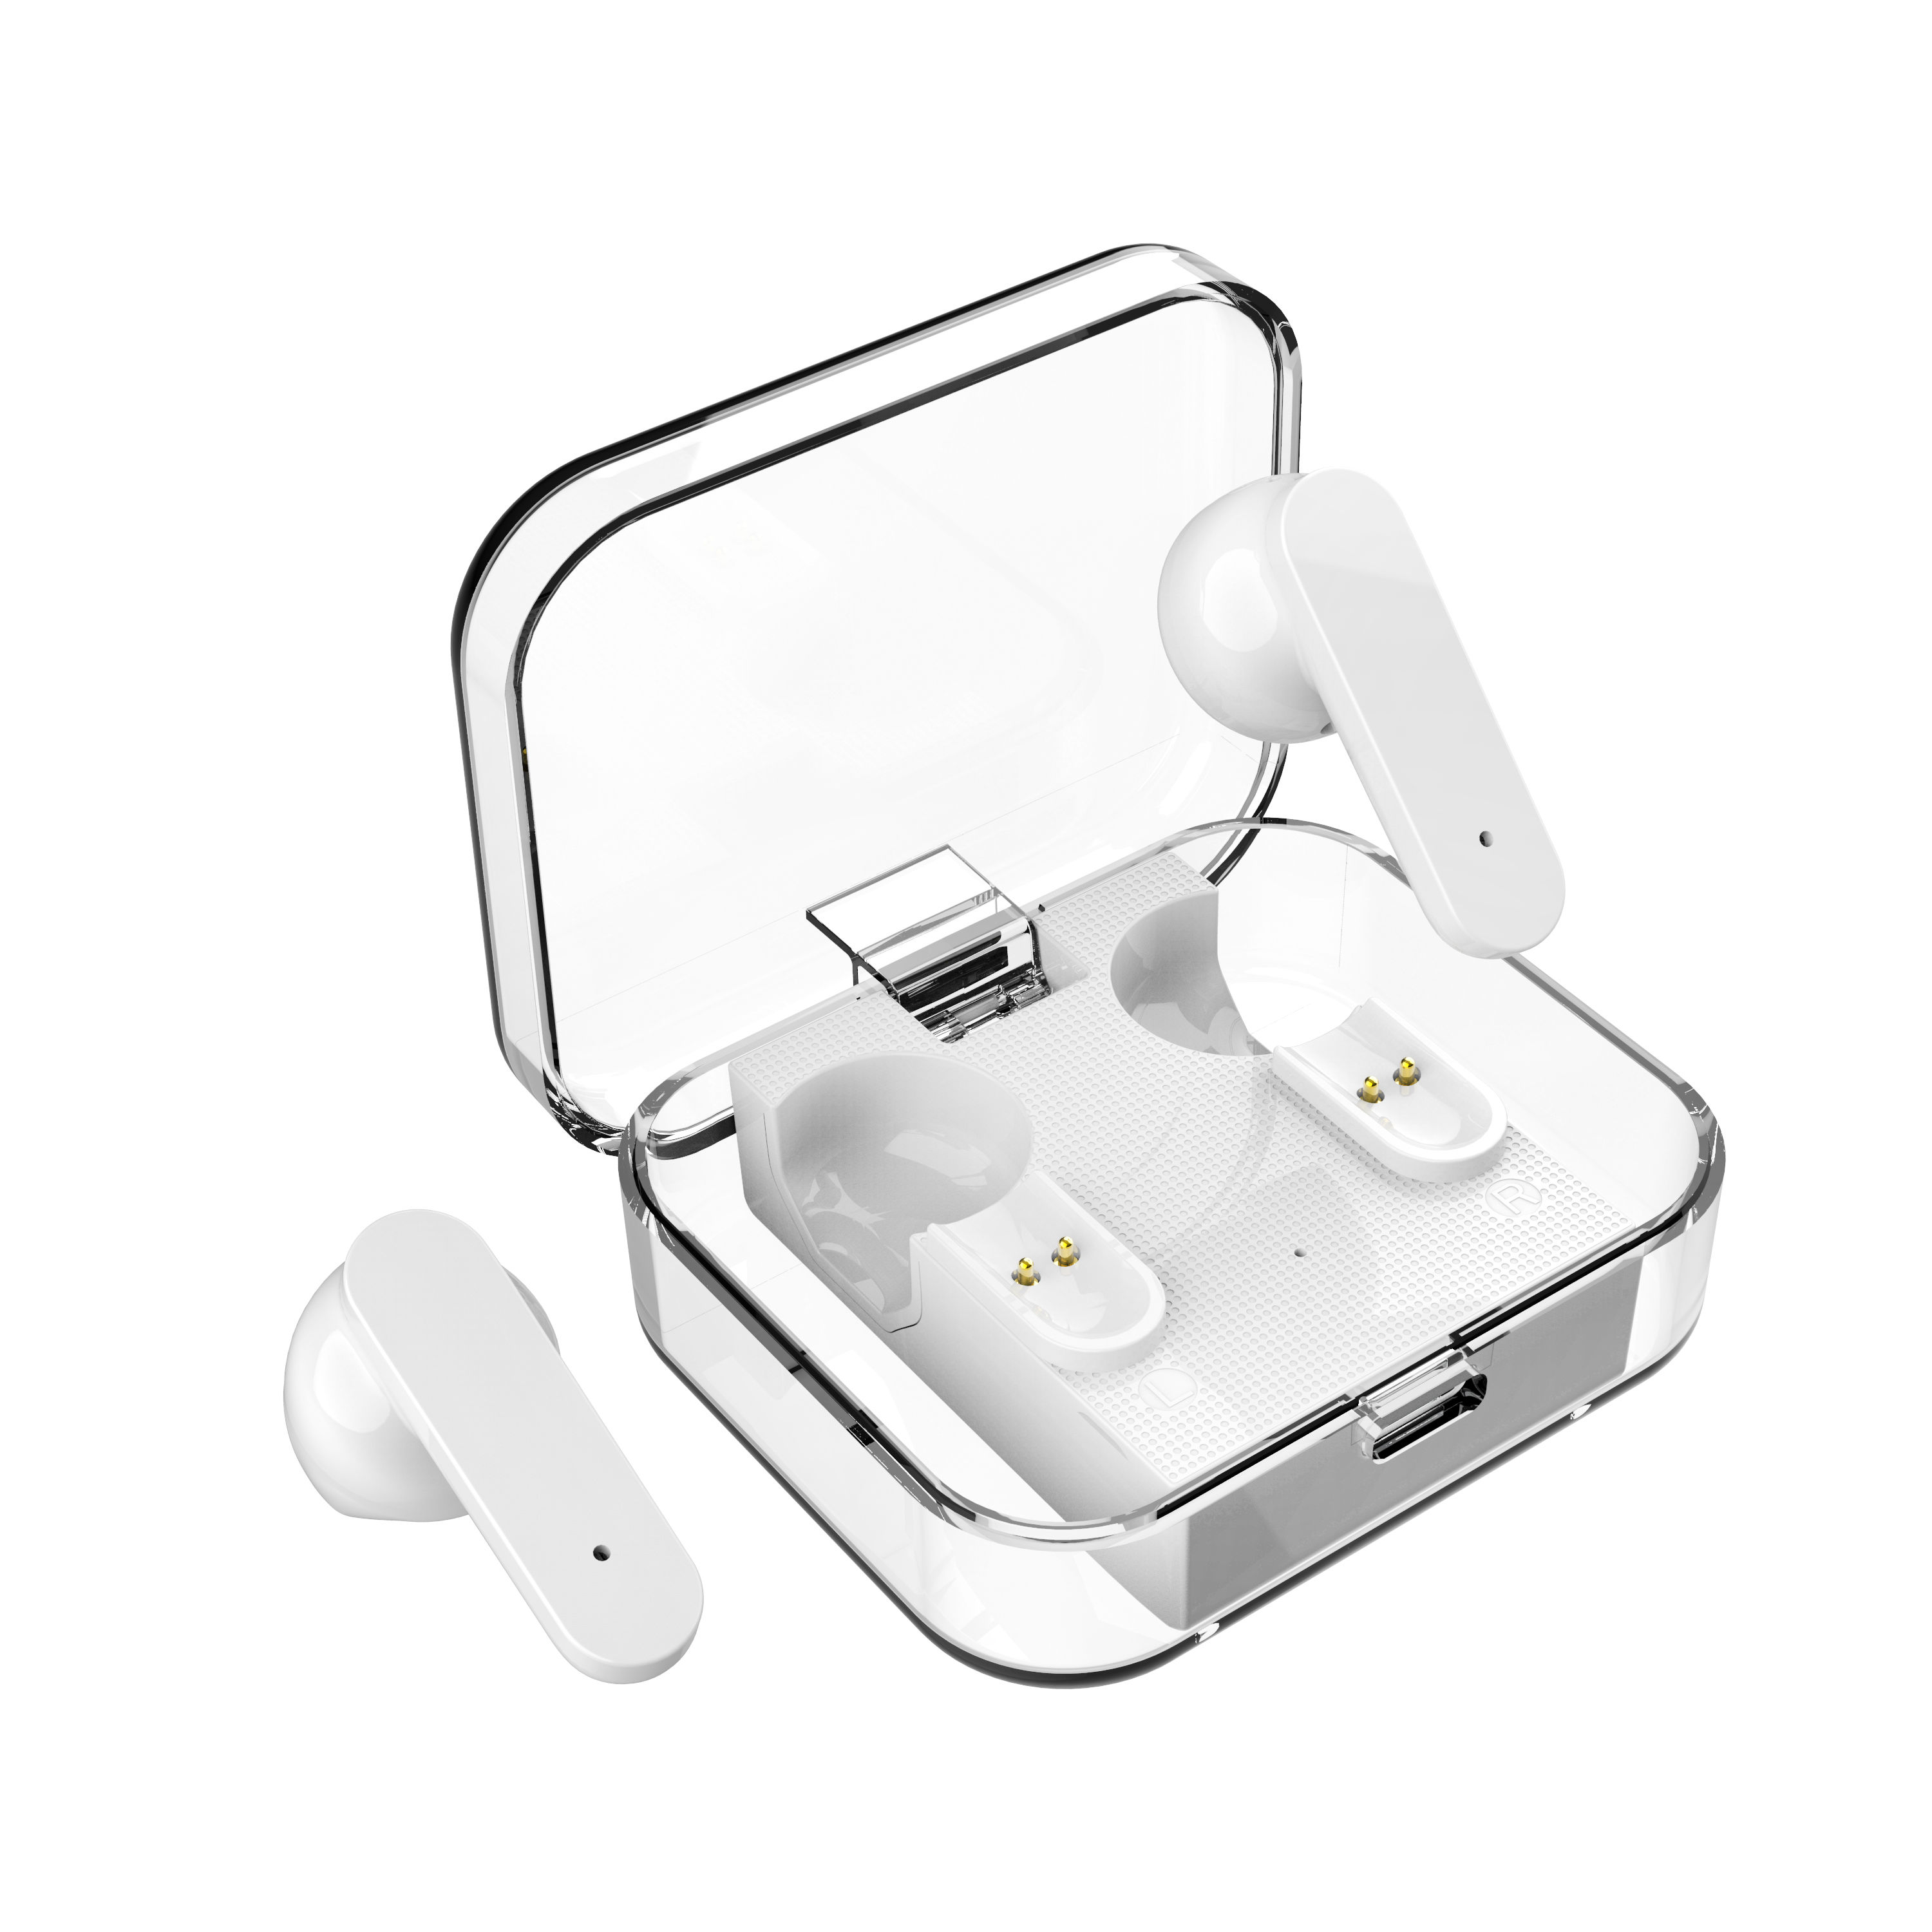  Auriculares Bluetooth inalámbricos baratos, auriculares de  reproducción de 32 horas con estuche de carga tipo C y micrófono, IPX5  impermeables estéreo para deportes blanco : Electrónica